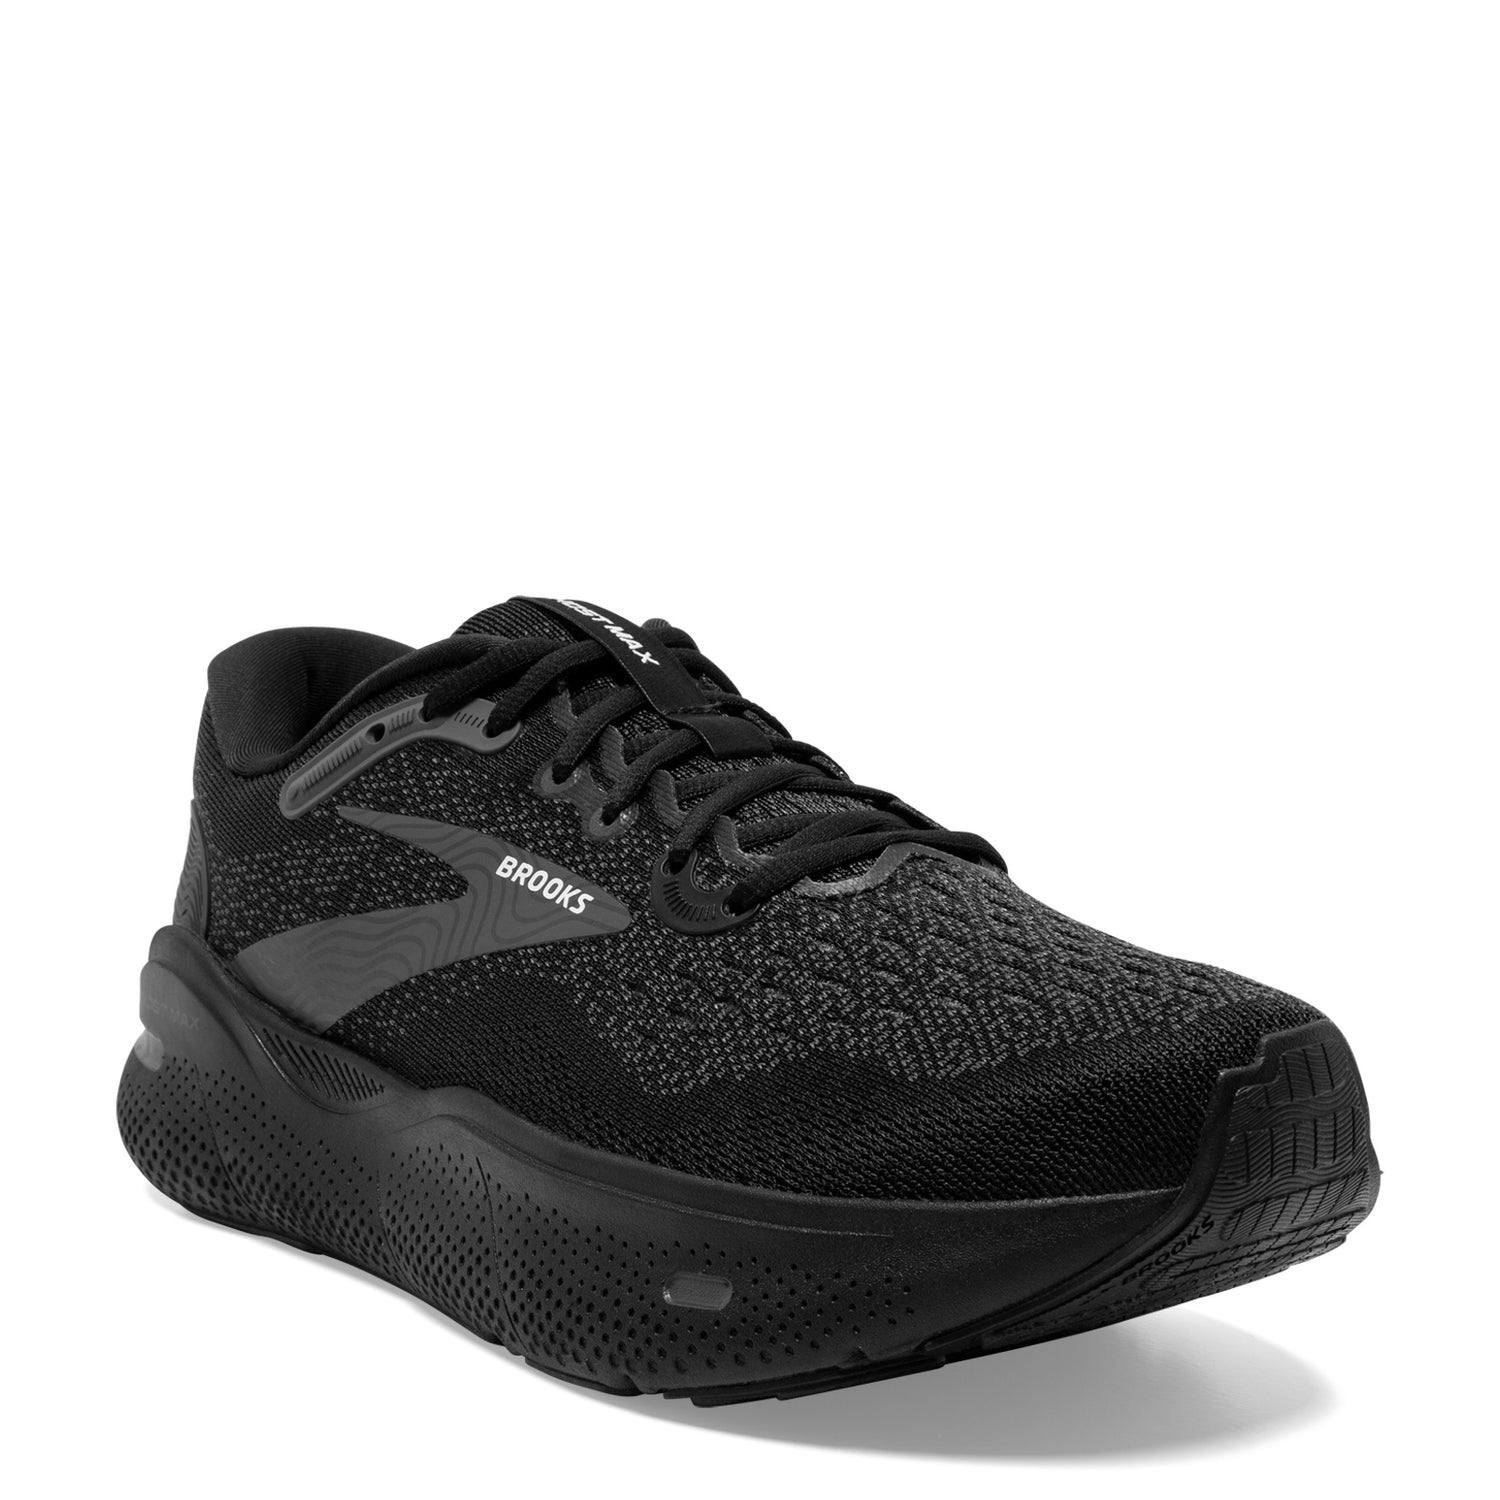 Peltz Shoes  Women's Brooks Ghost Max Running Shoe - Extra Wide Width Black/Black/Ebony 120395 2E 020